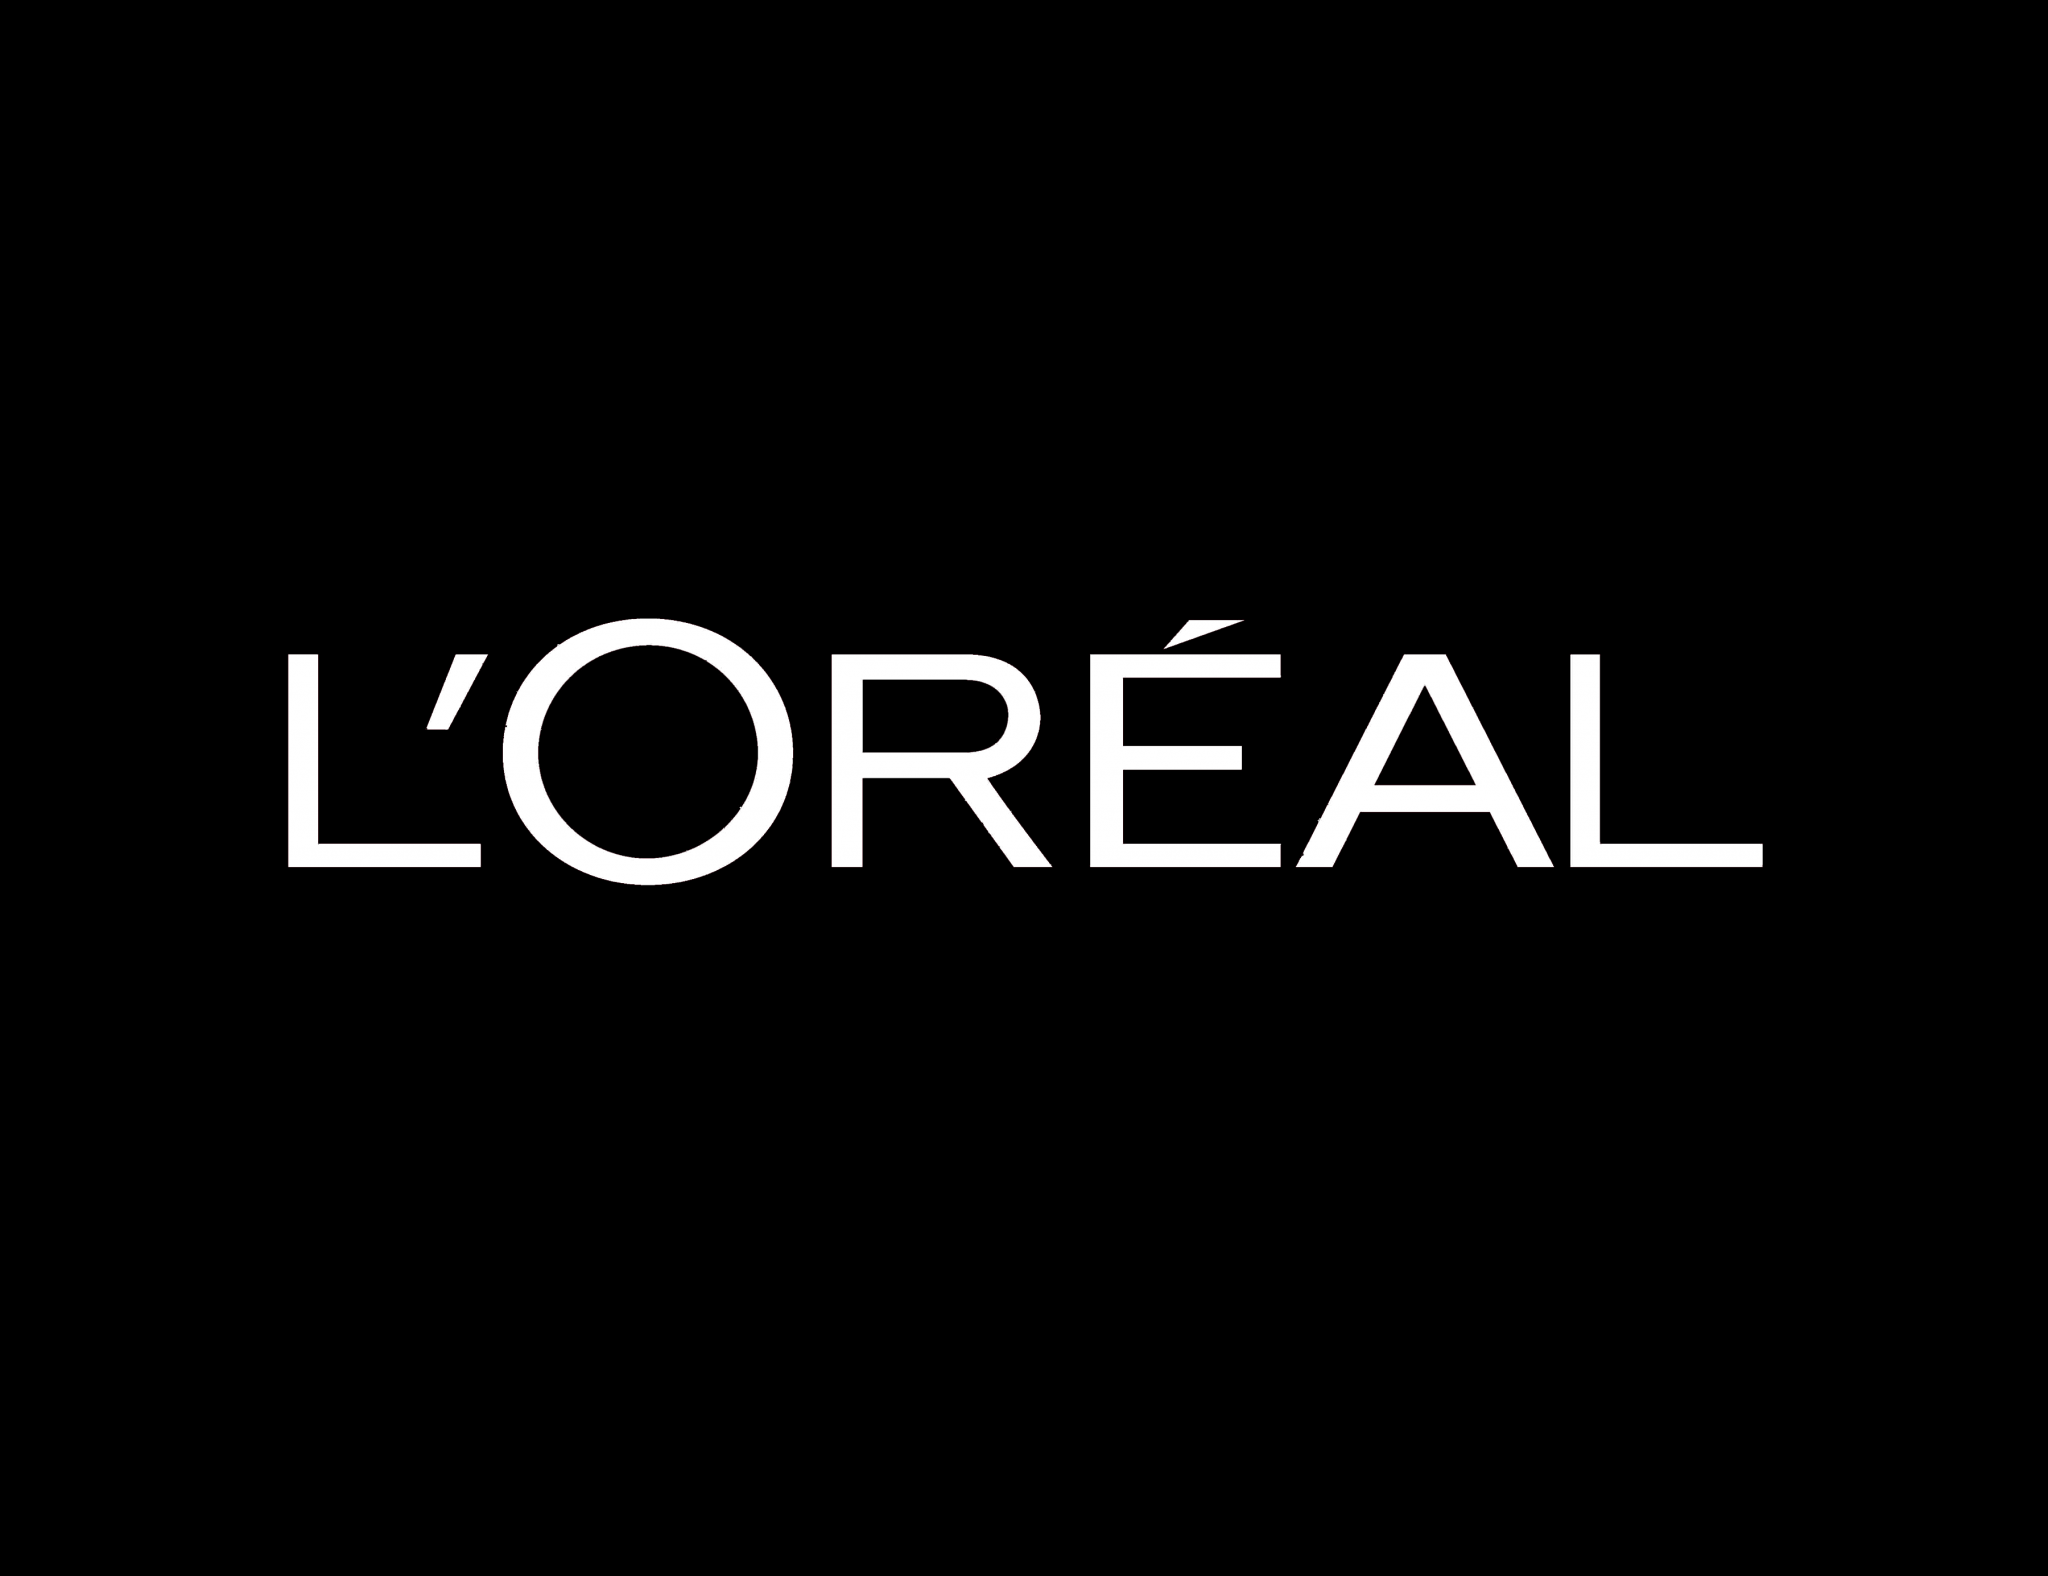 L'Oreal Logo - L'Oréal Logo. L'Oréal Logo Vector Free Download